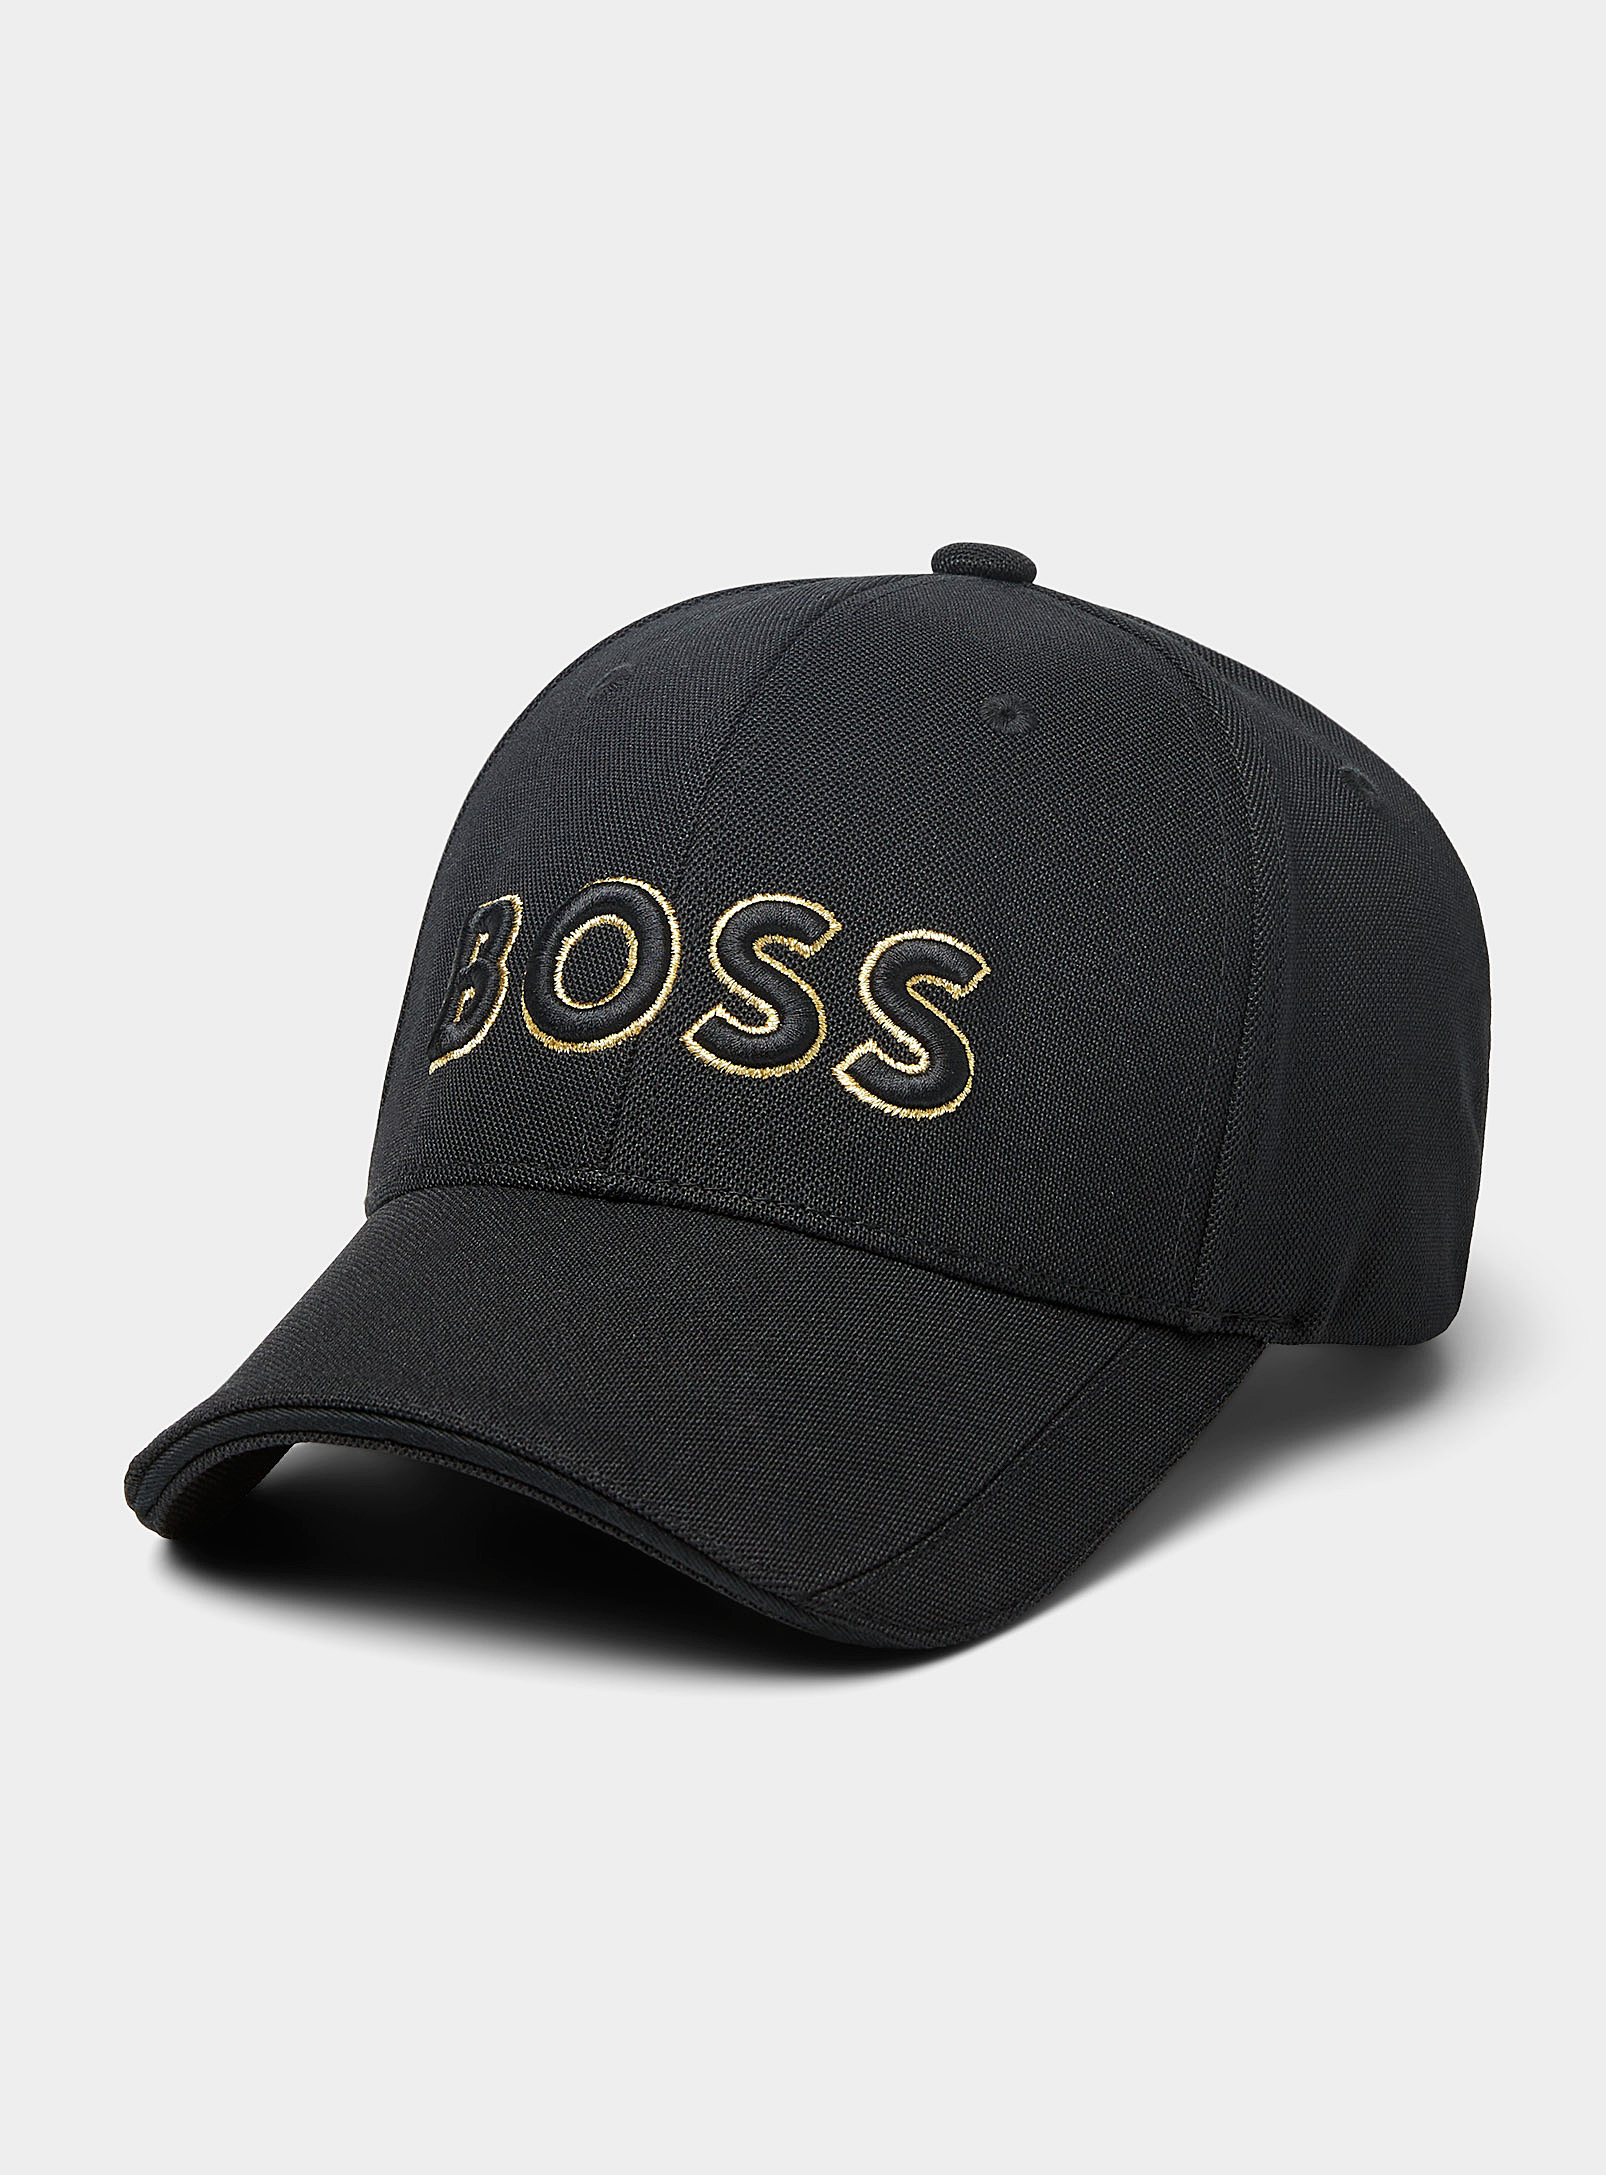 BOSS - Men's Large logo piqué cap